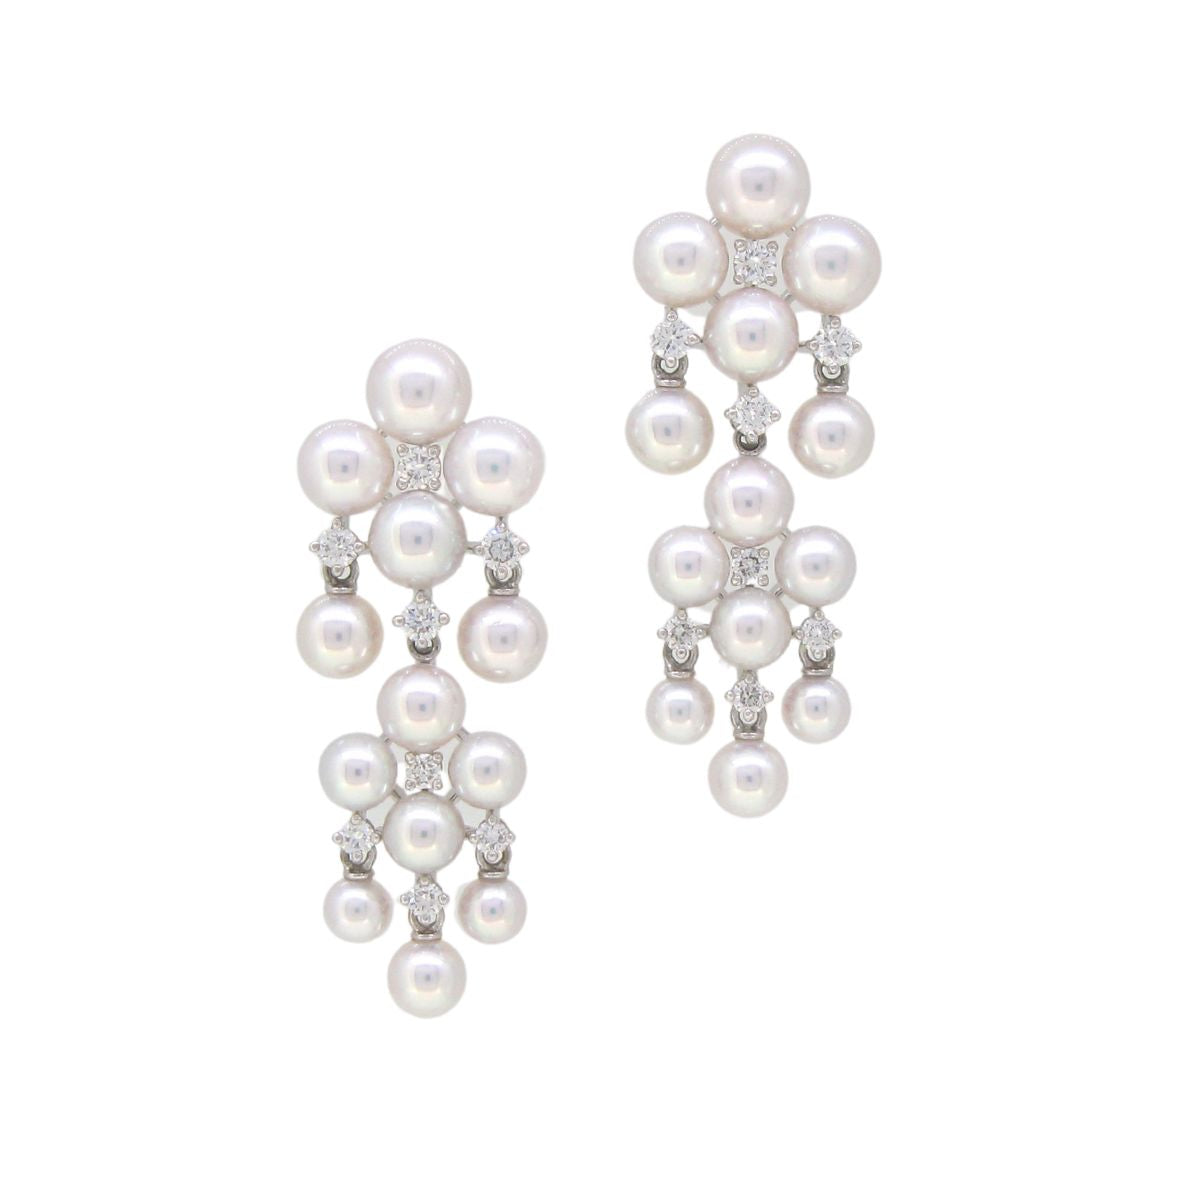 18K Diamond & Akoya Pearl Earrings
Akoya Pearl 26 pcs
Round Diamond 0.64 ct